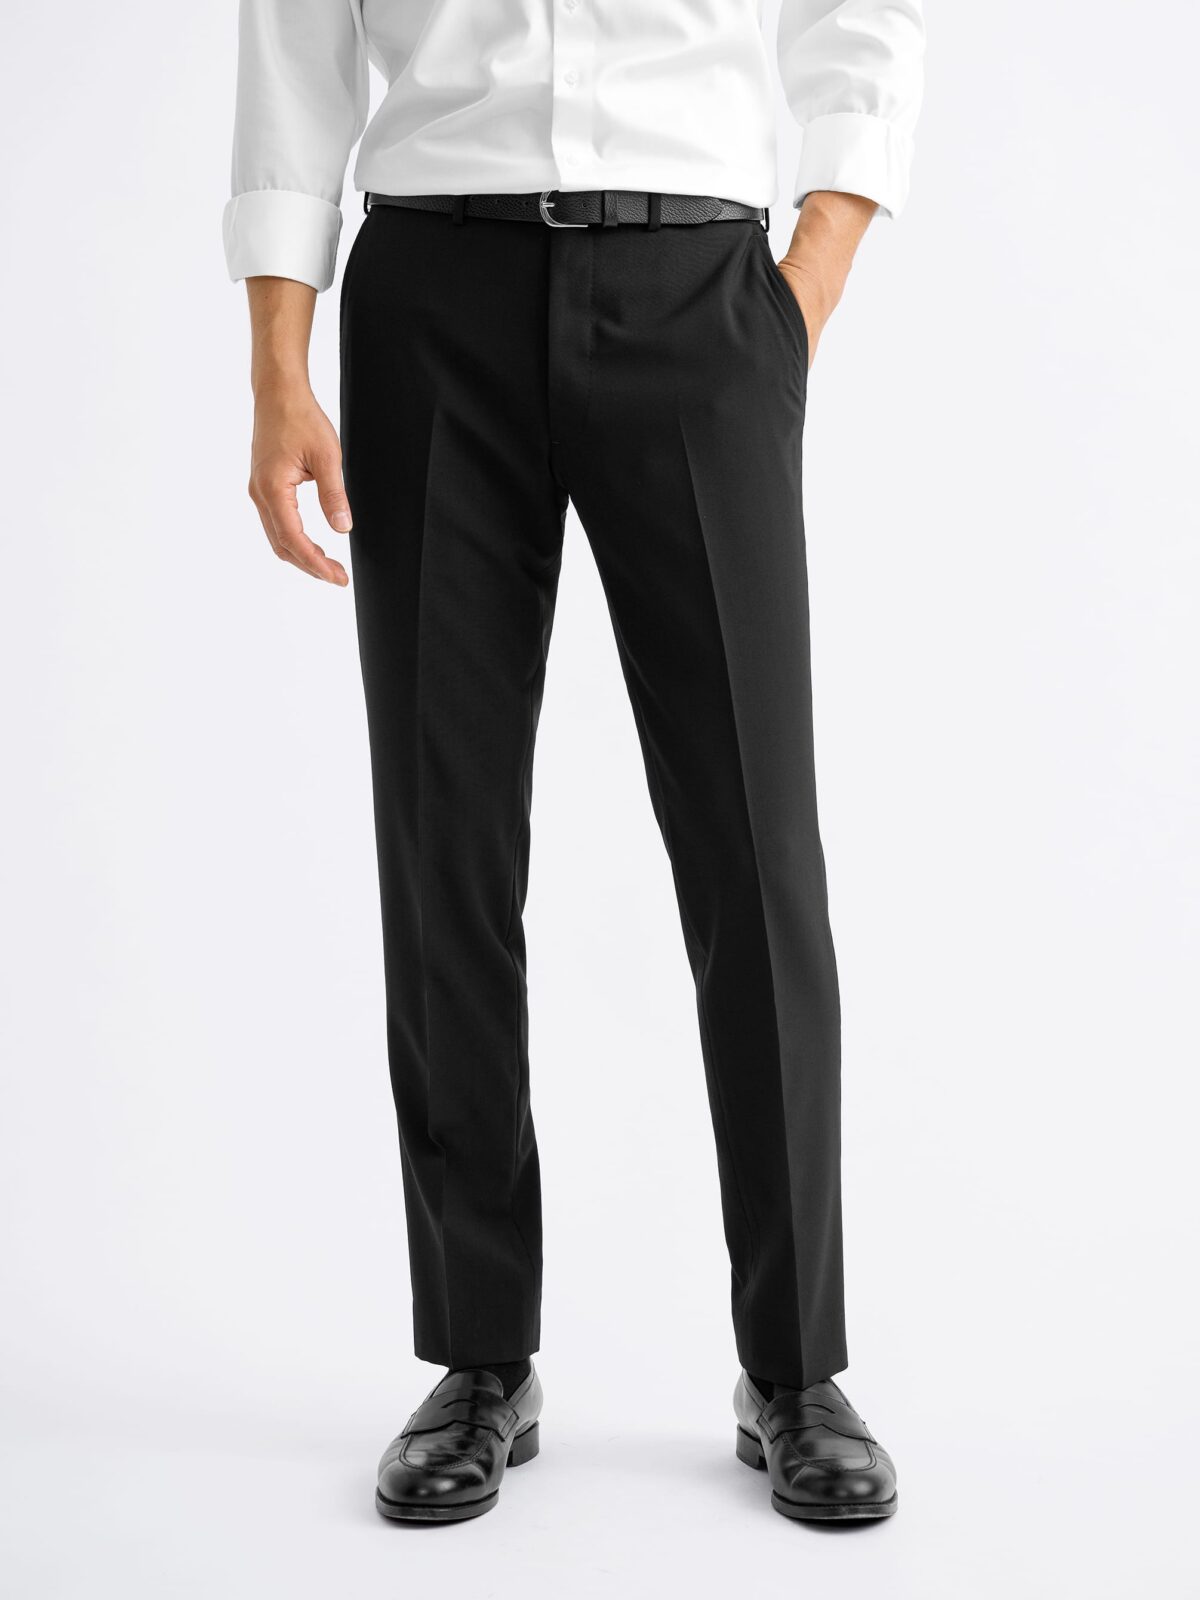 Buy Men Black Solid Slim Fit Formal Trousers Online - 693372 | Peter England-baongoctrading.com.vn